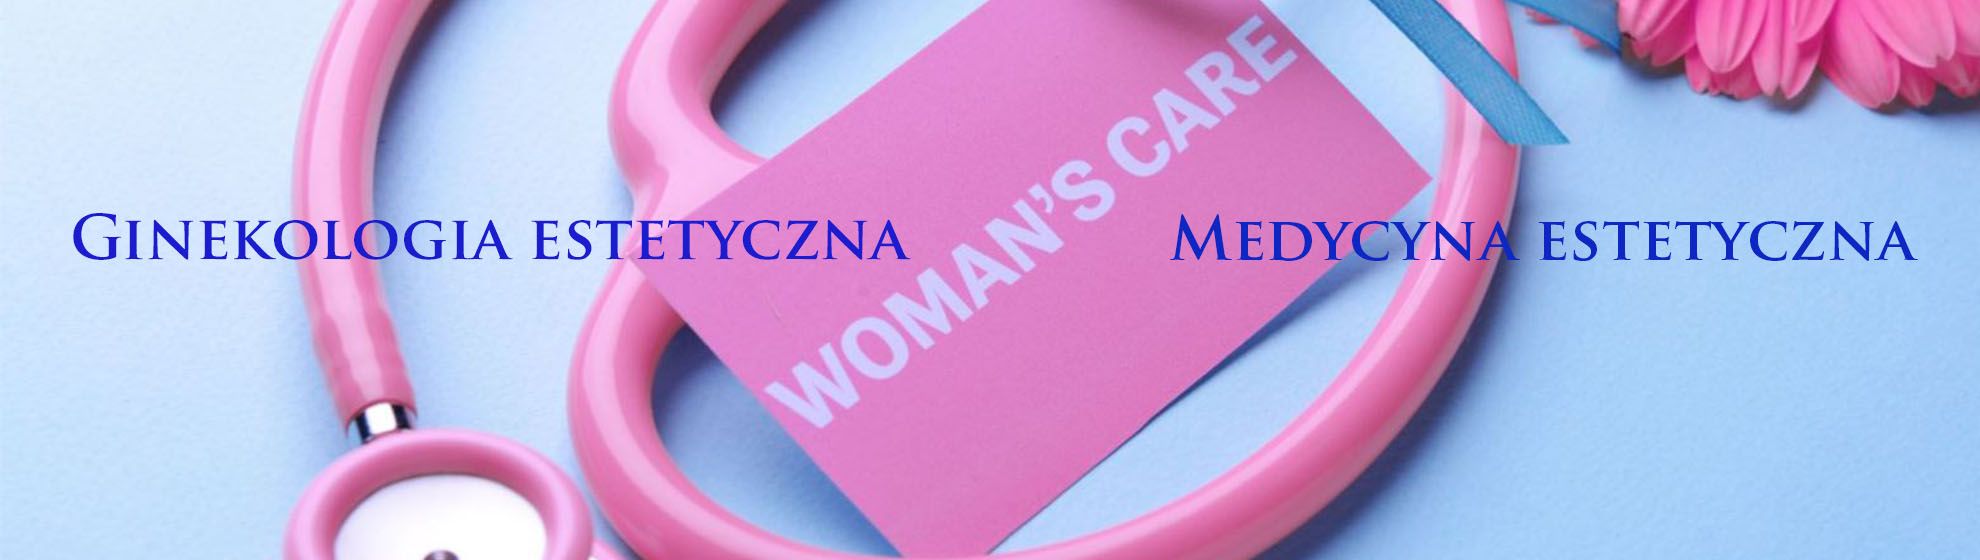 Women's Care by Anna Słomka